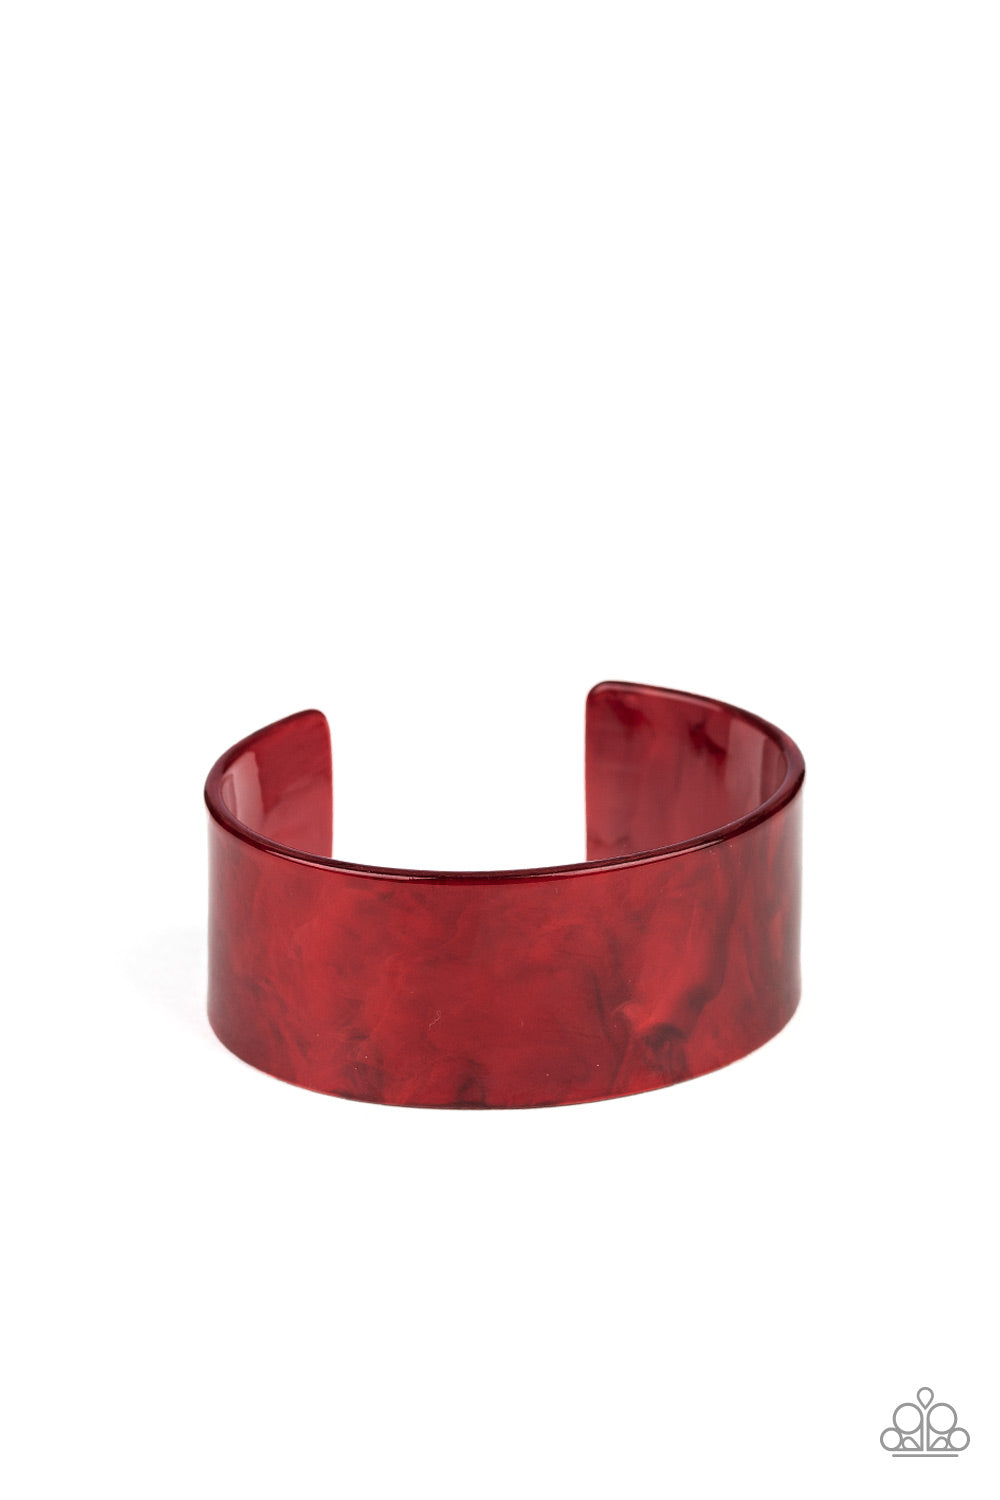 Glaze Over - Red - VJ Bedazzled Jewelry